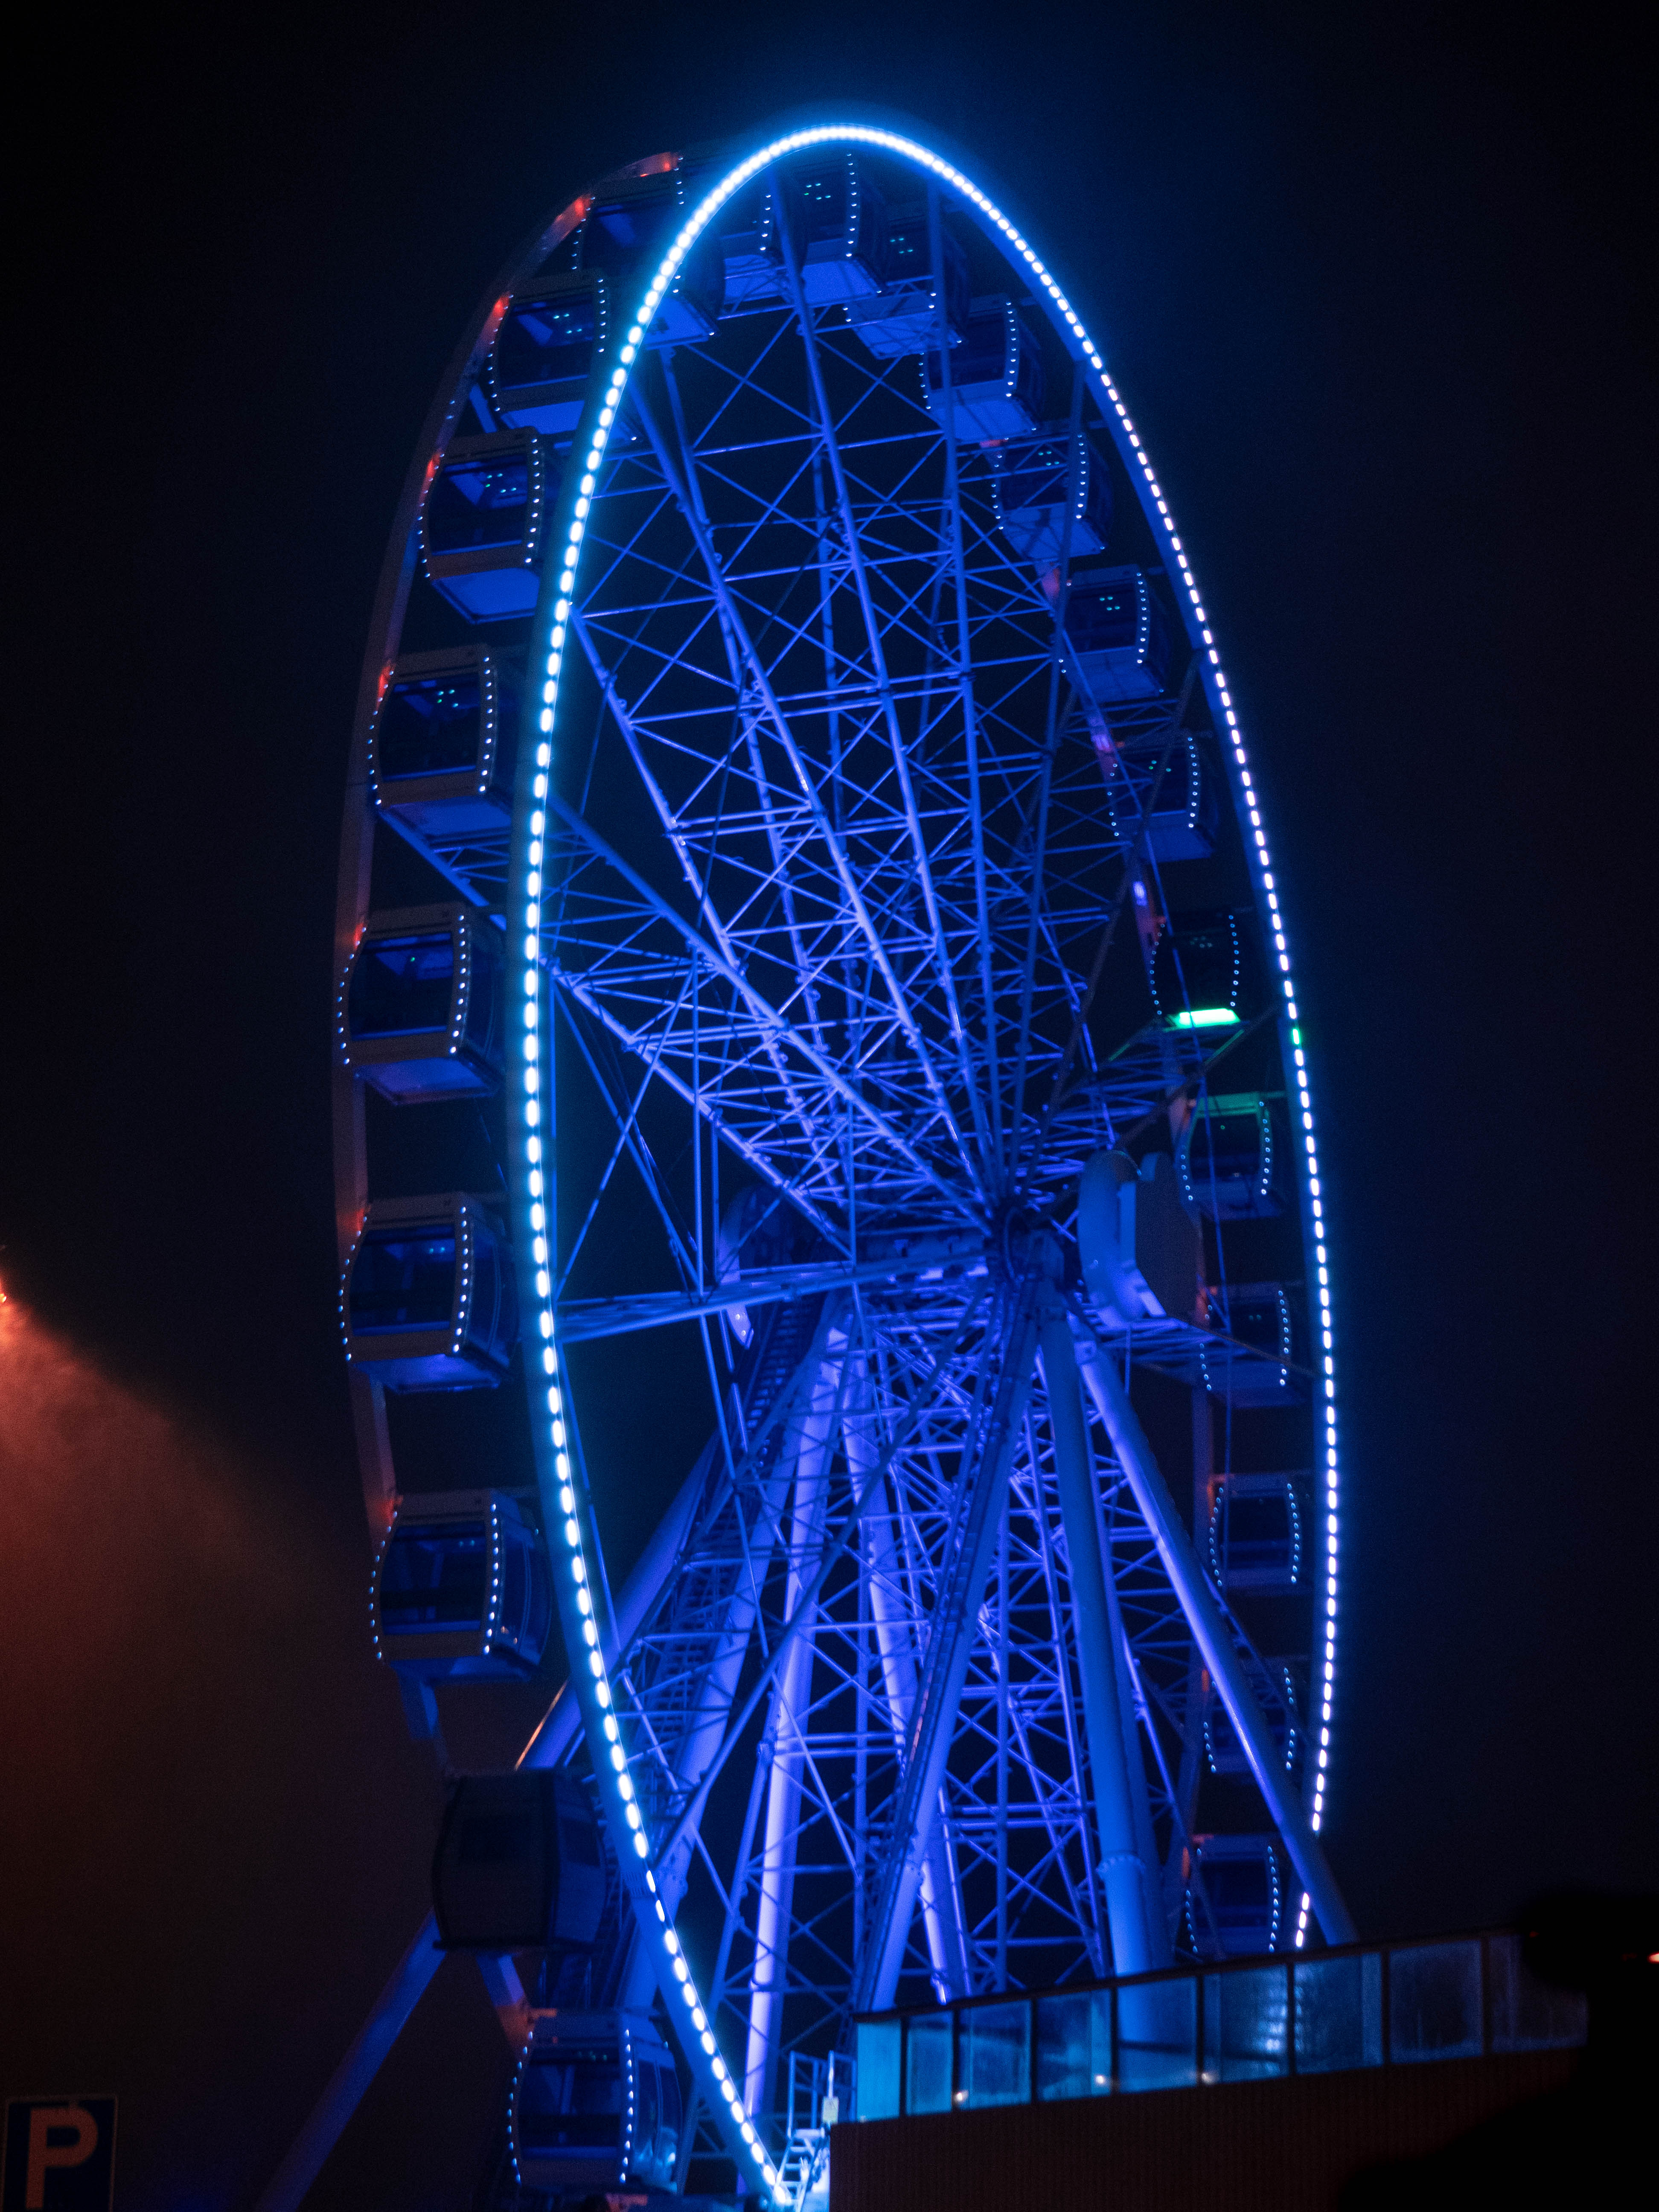 Eye of Helsinki carousel. Located on Katajanokka in Helsinki. At night. Blue led lights. Haze and fog.